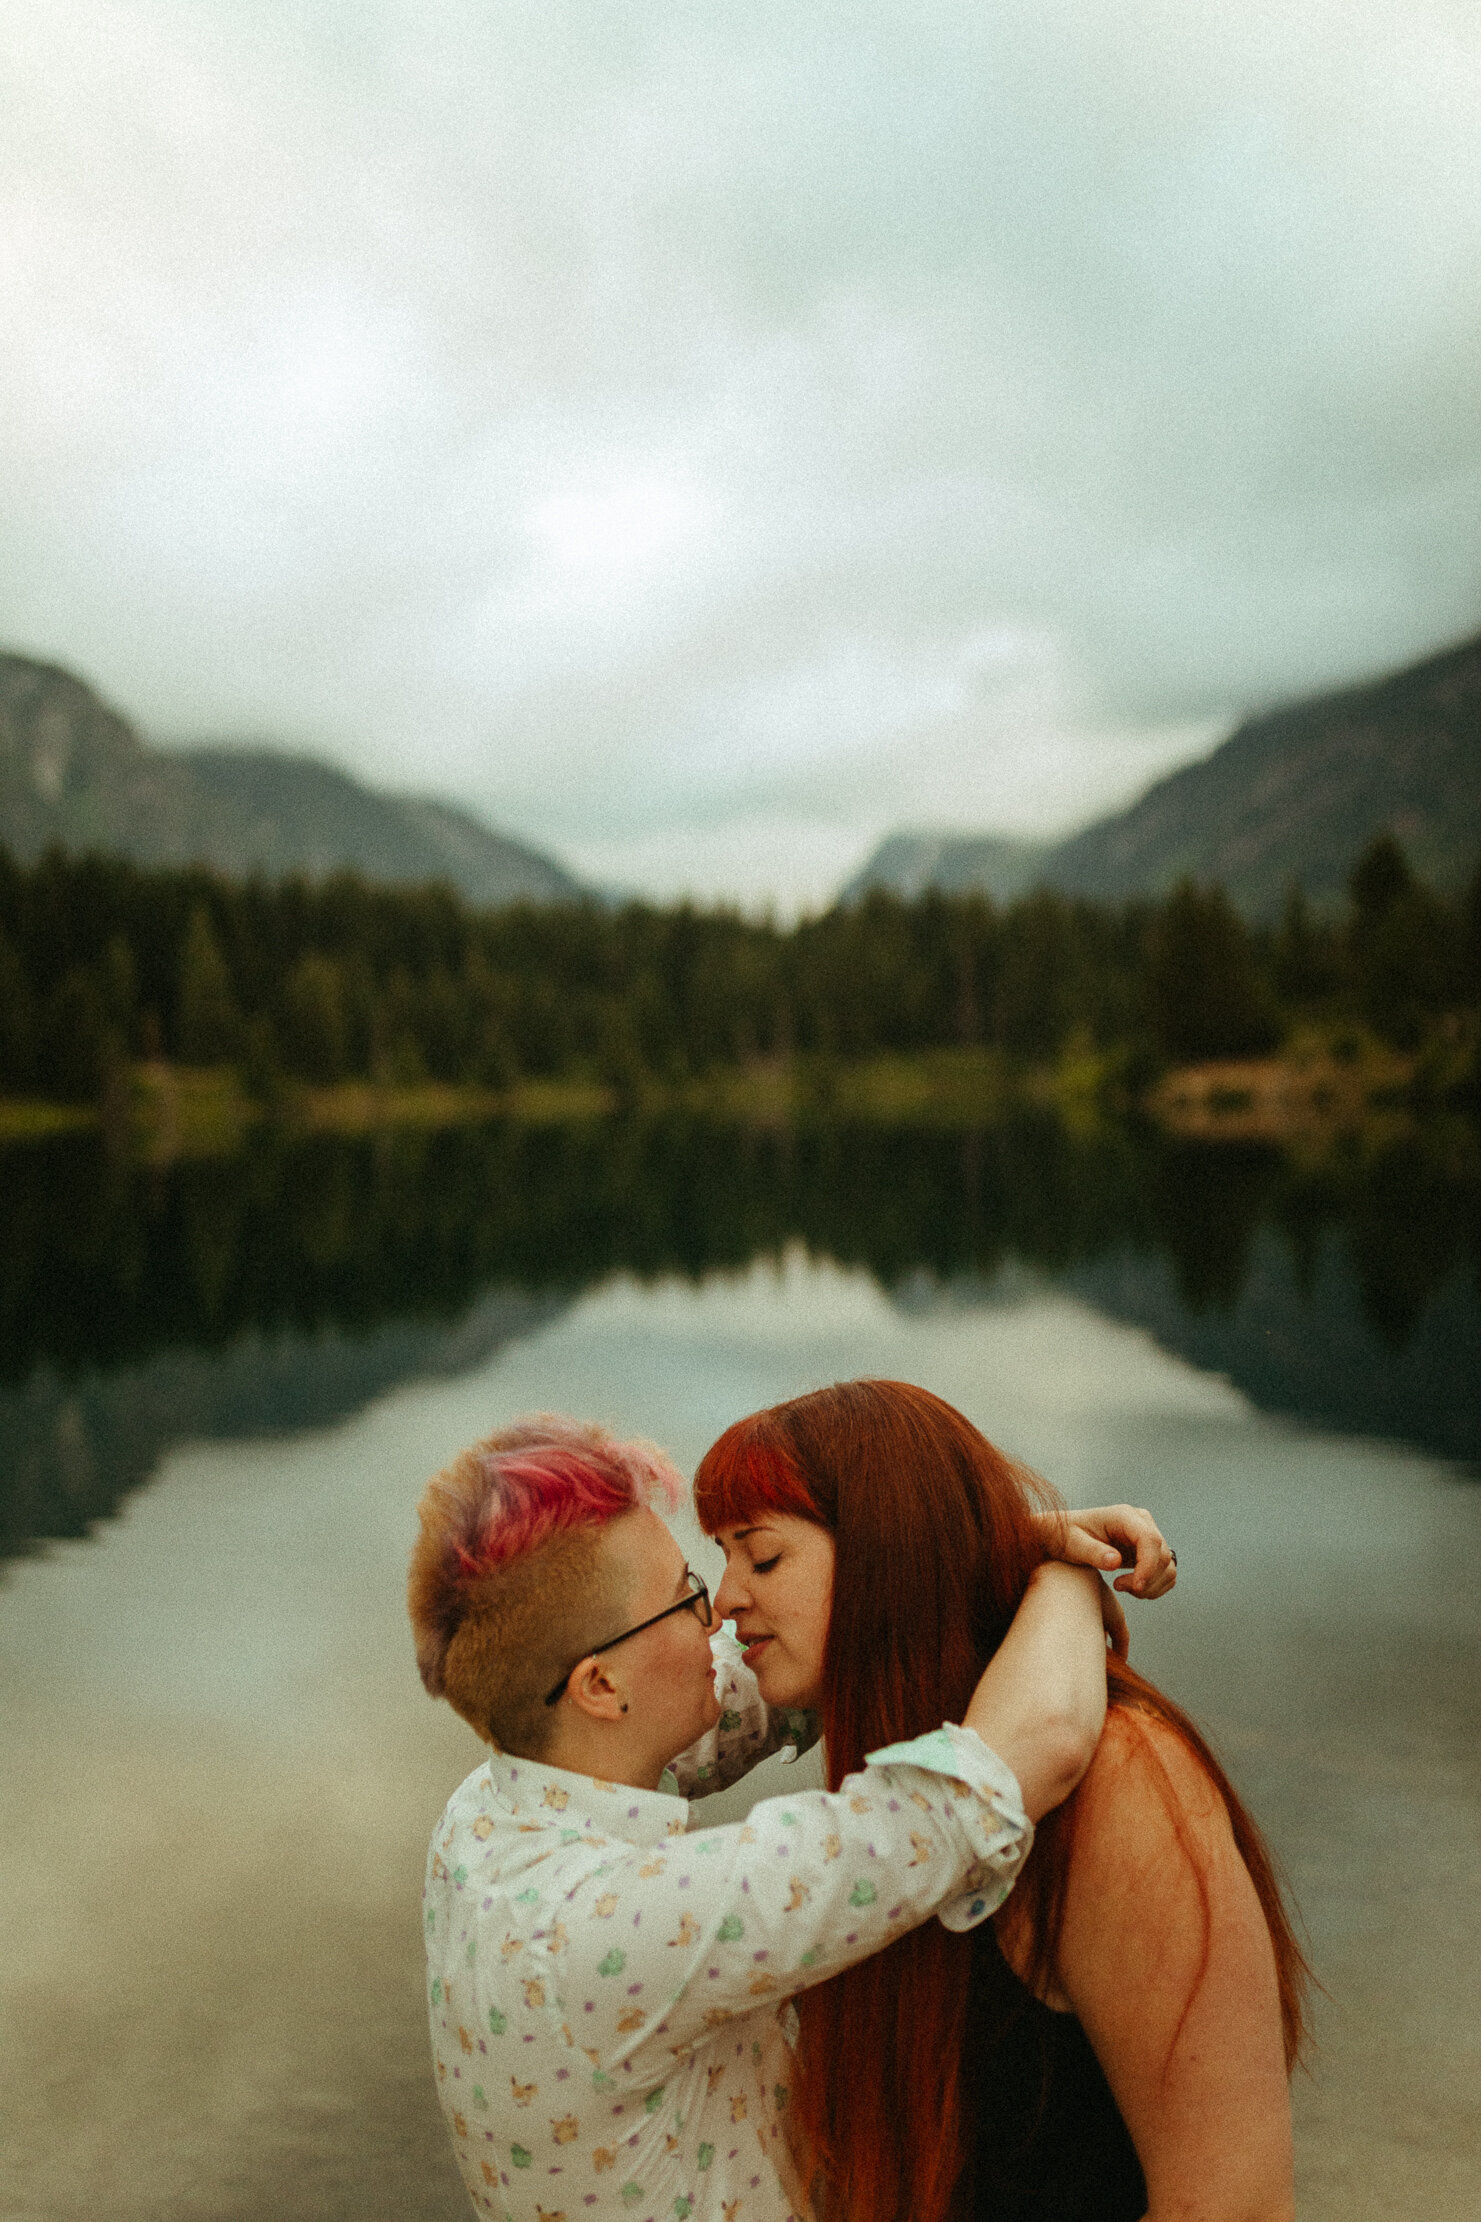 franklin-falls-gold-creek-pond-washington-elopement-photographer-queer-lgbtq-pnw-intimate-wedding-photography-halle-roland-5.jpg